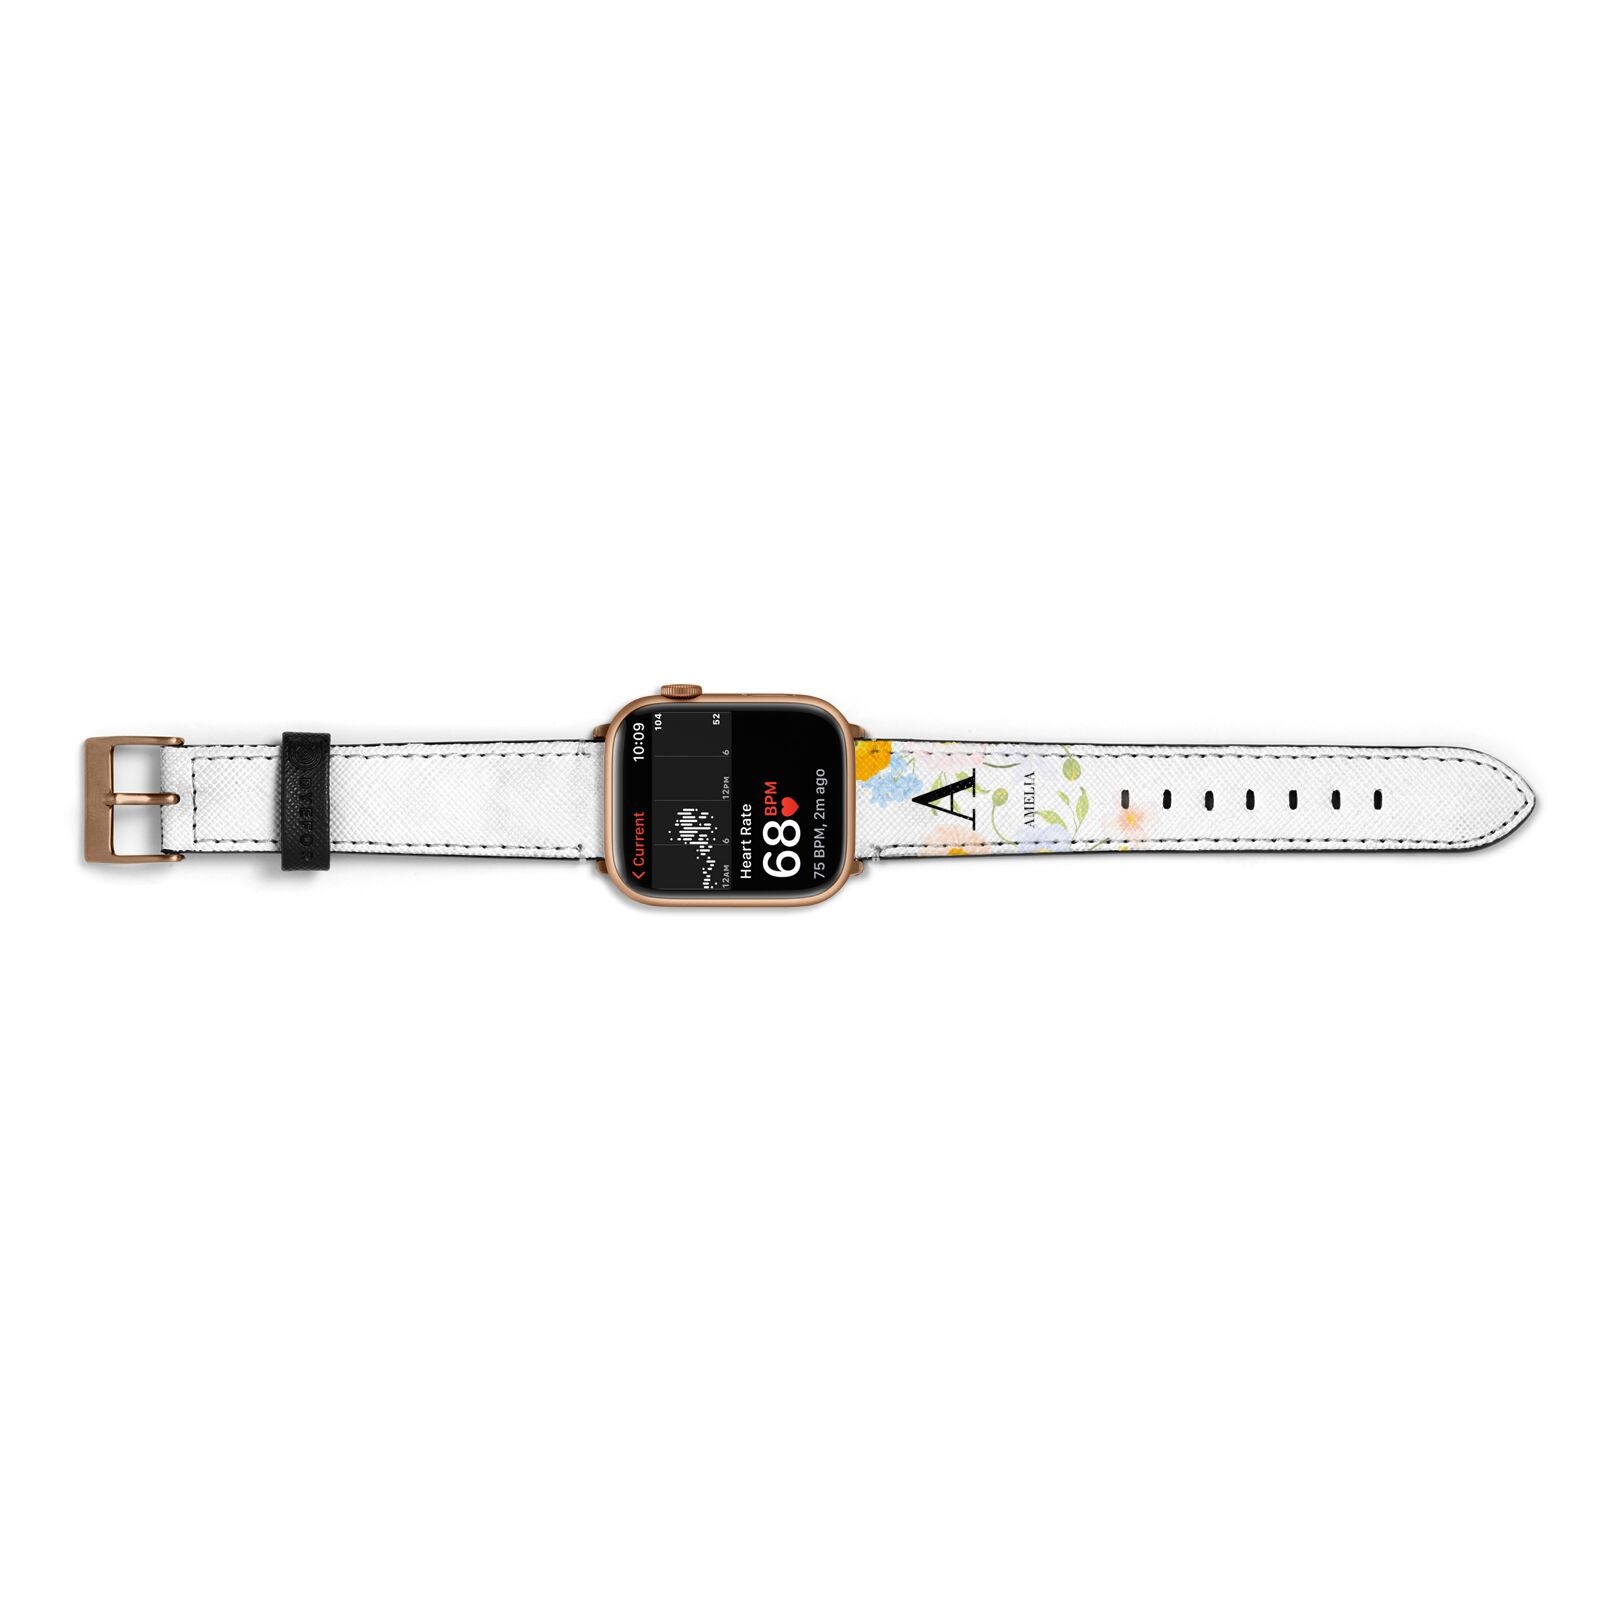 Customised Floral Apple Watch Strap Size 38mm Landscape Image Gold Hardware